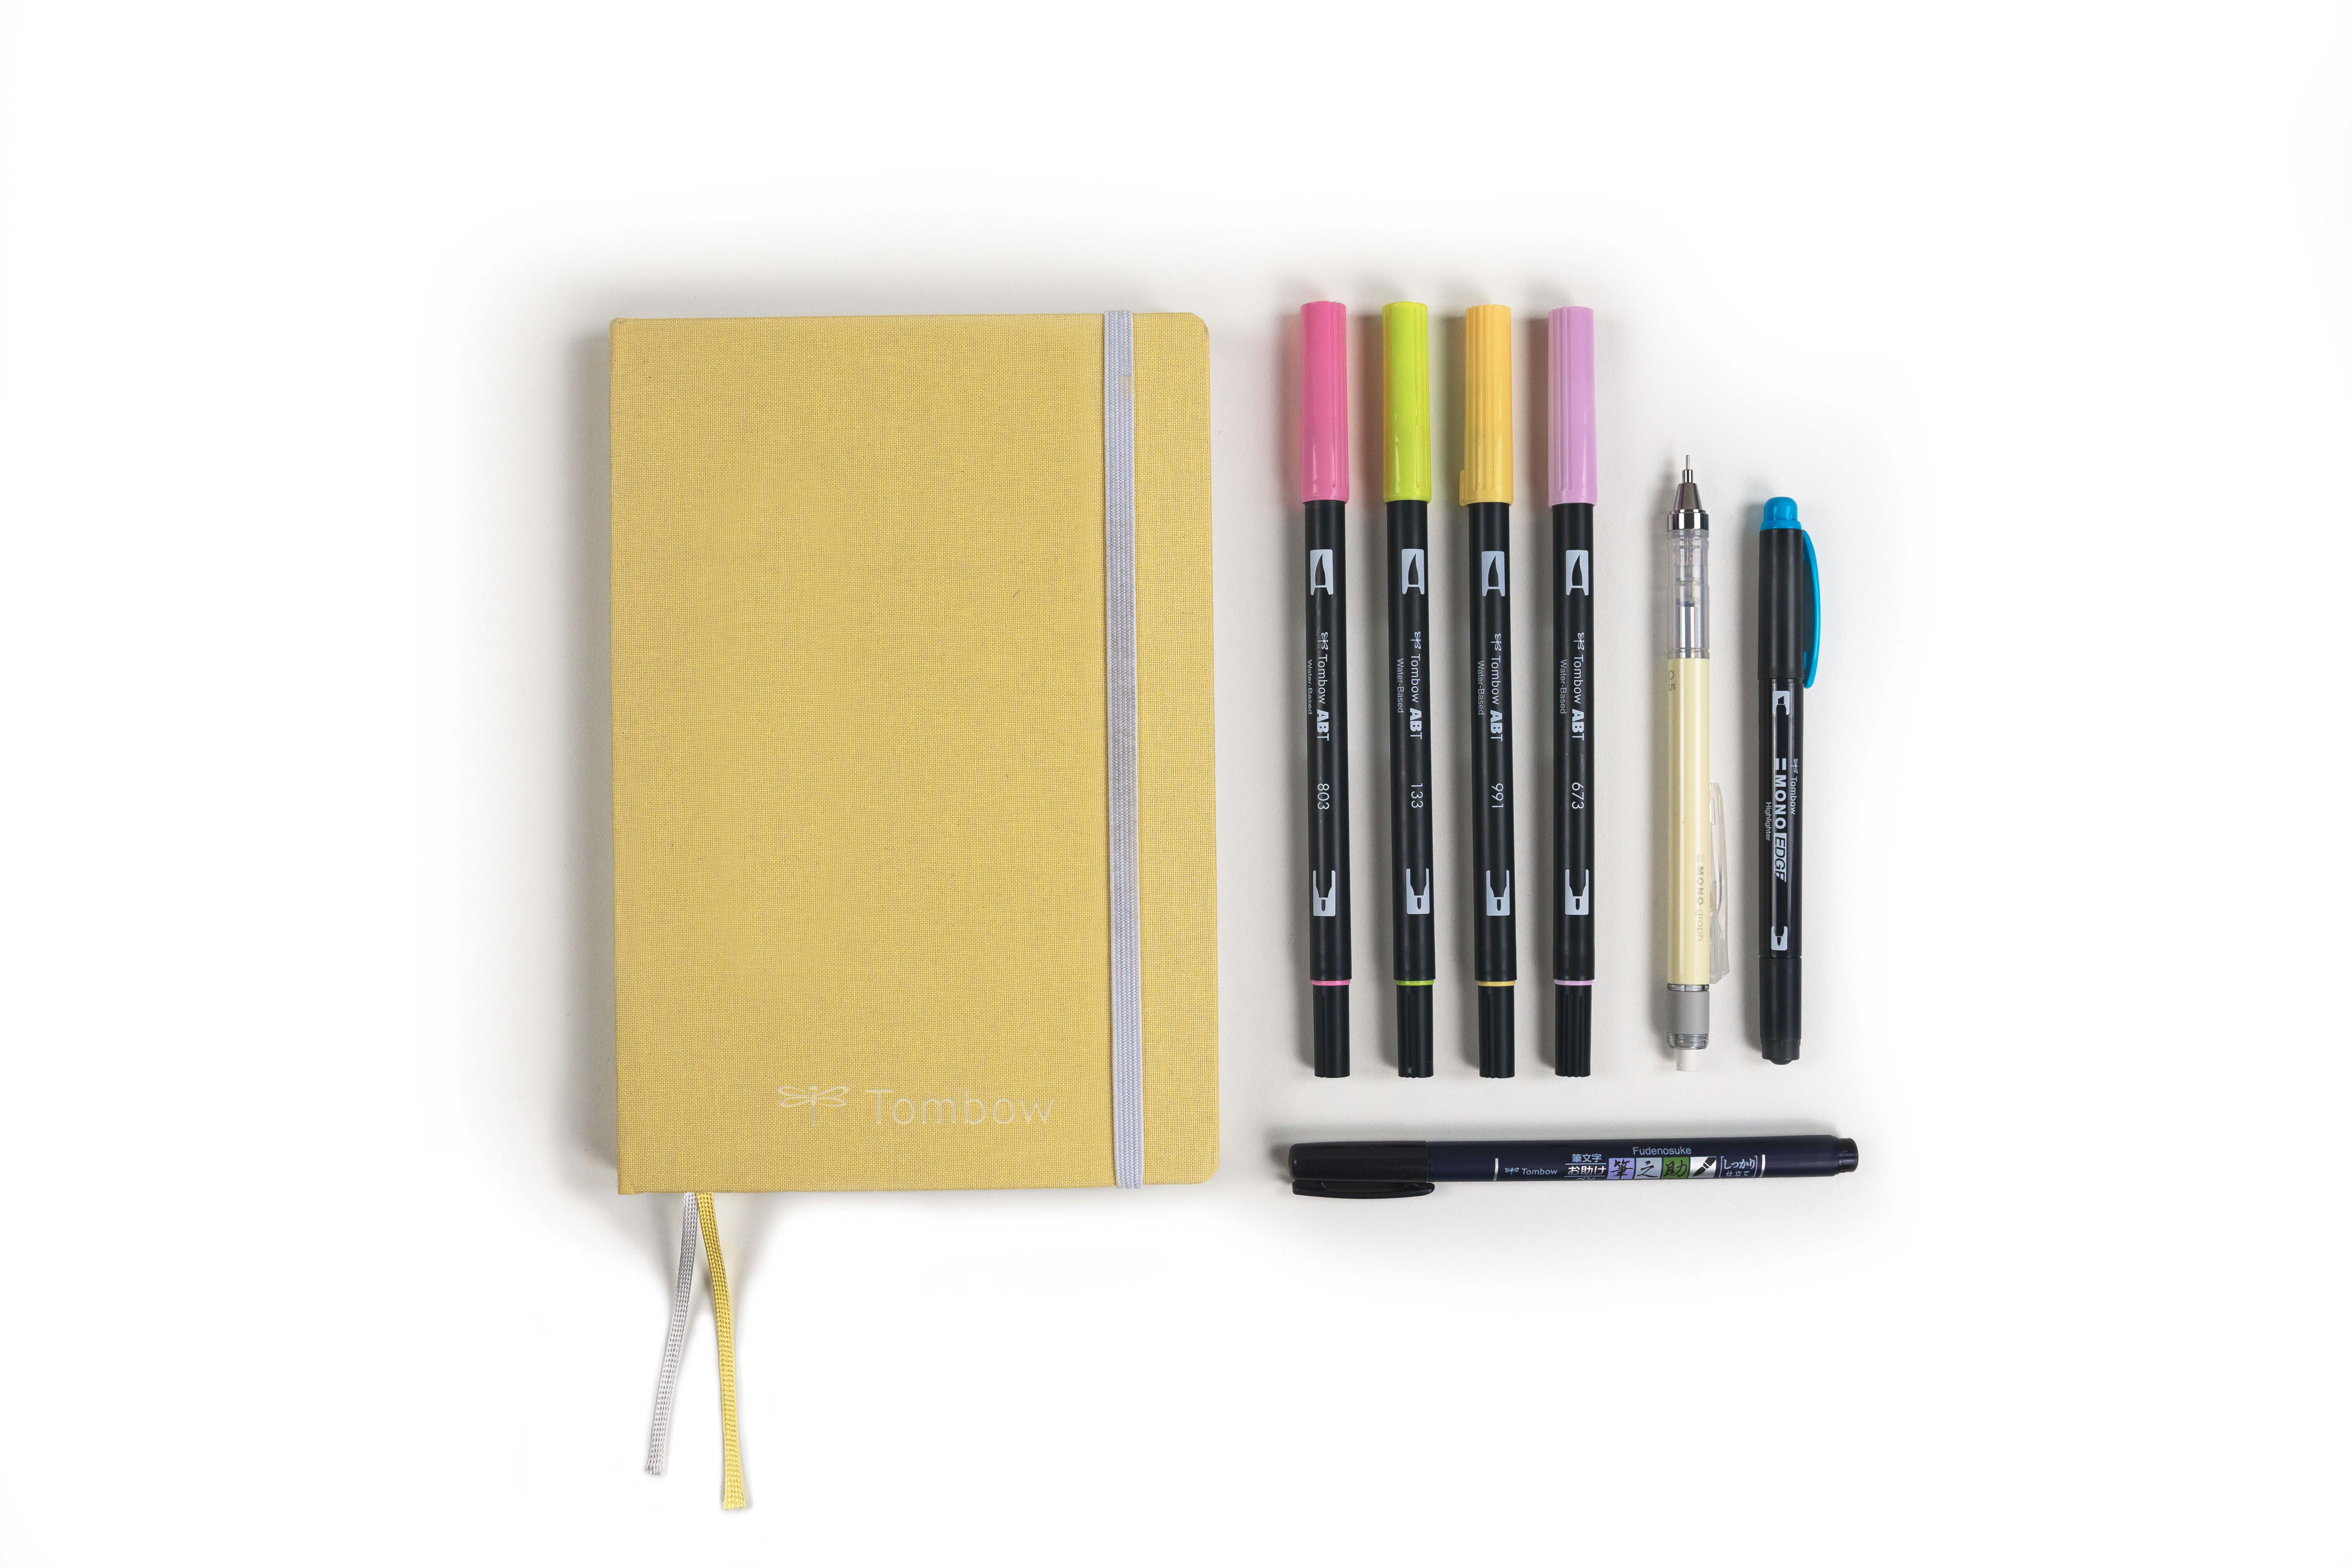 TOMBOW Creative Journaling Kit BUJO-SET2 Bright 8 pcs.